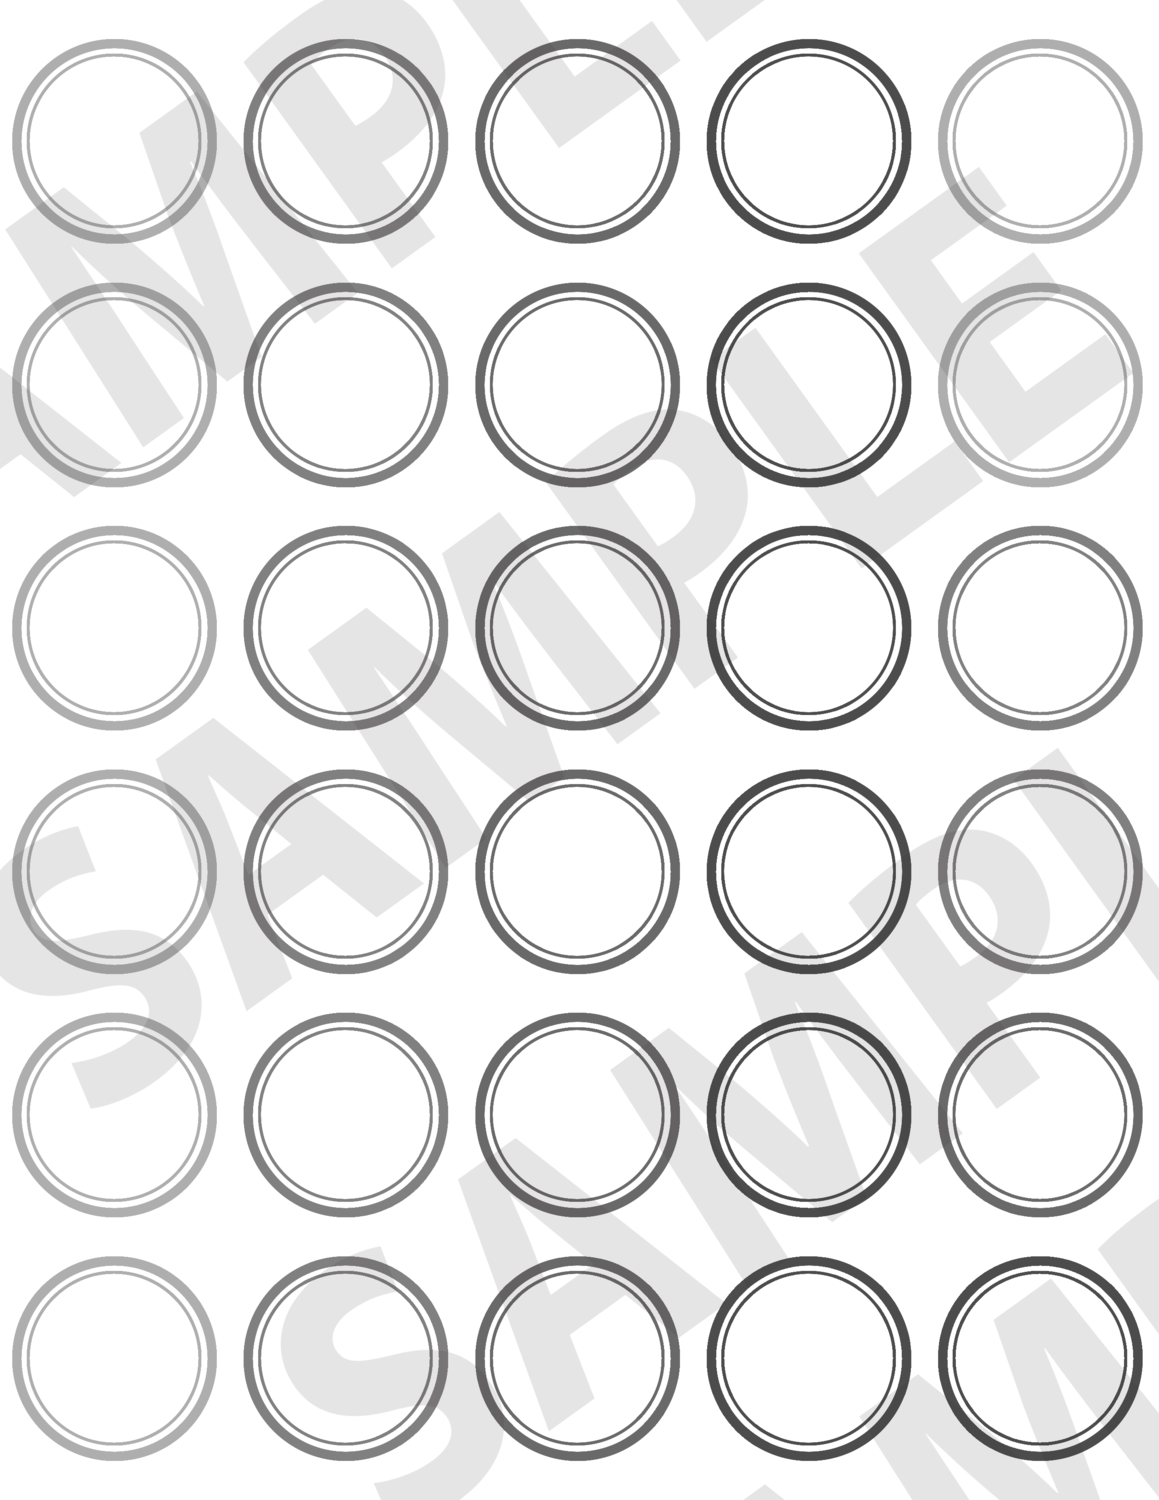 Light Gray - 1.5 Inch Circular Labels Embellishments